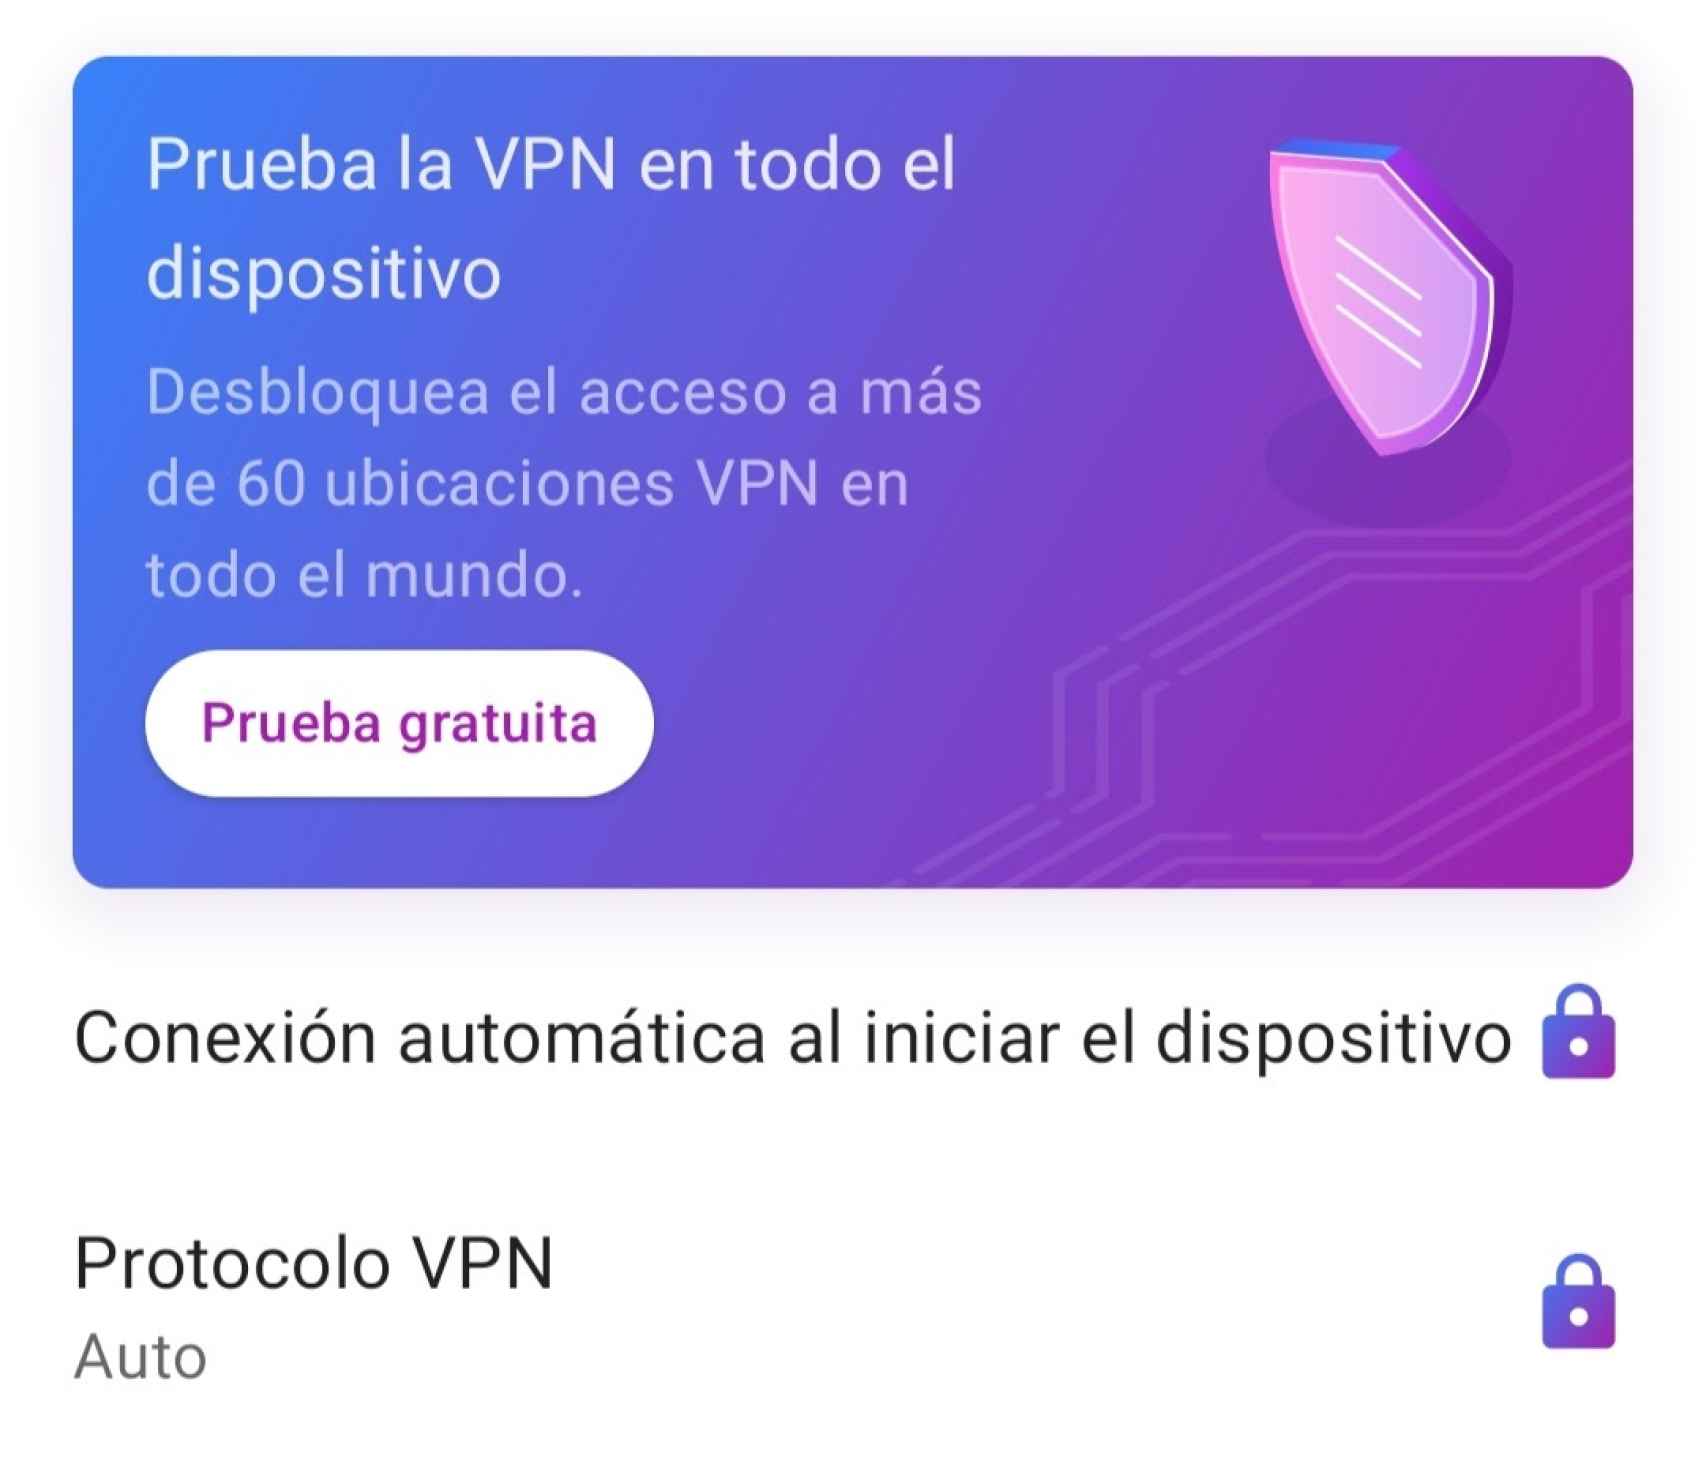 VPN Opera